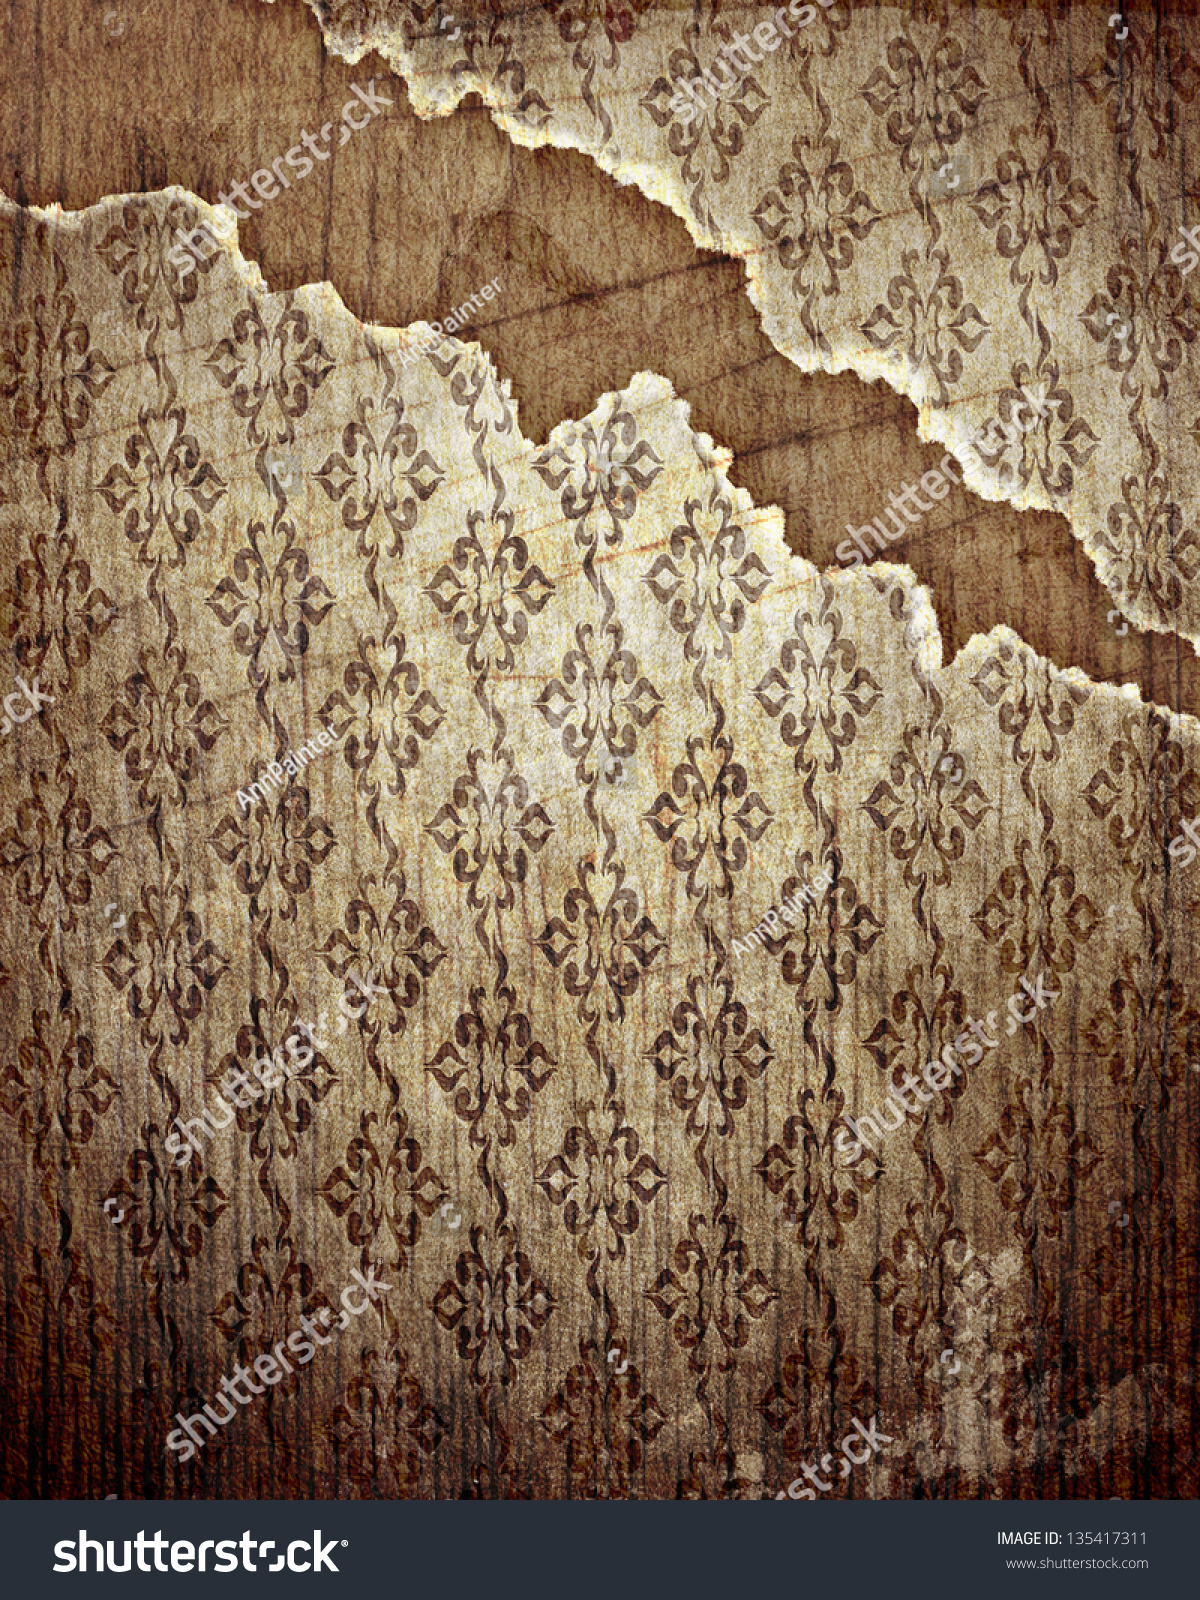 Royalty-free Damaged old wallpaper #135417311 Stock Photo | Avopix.com